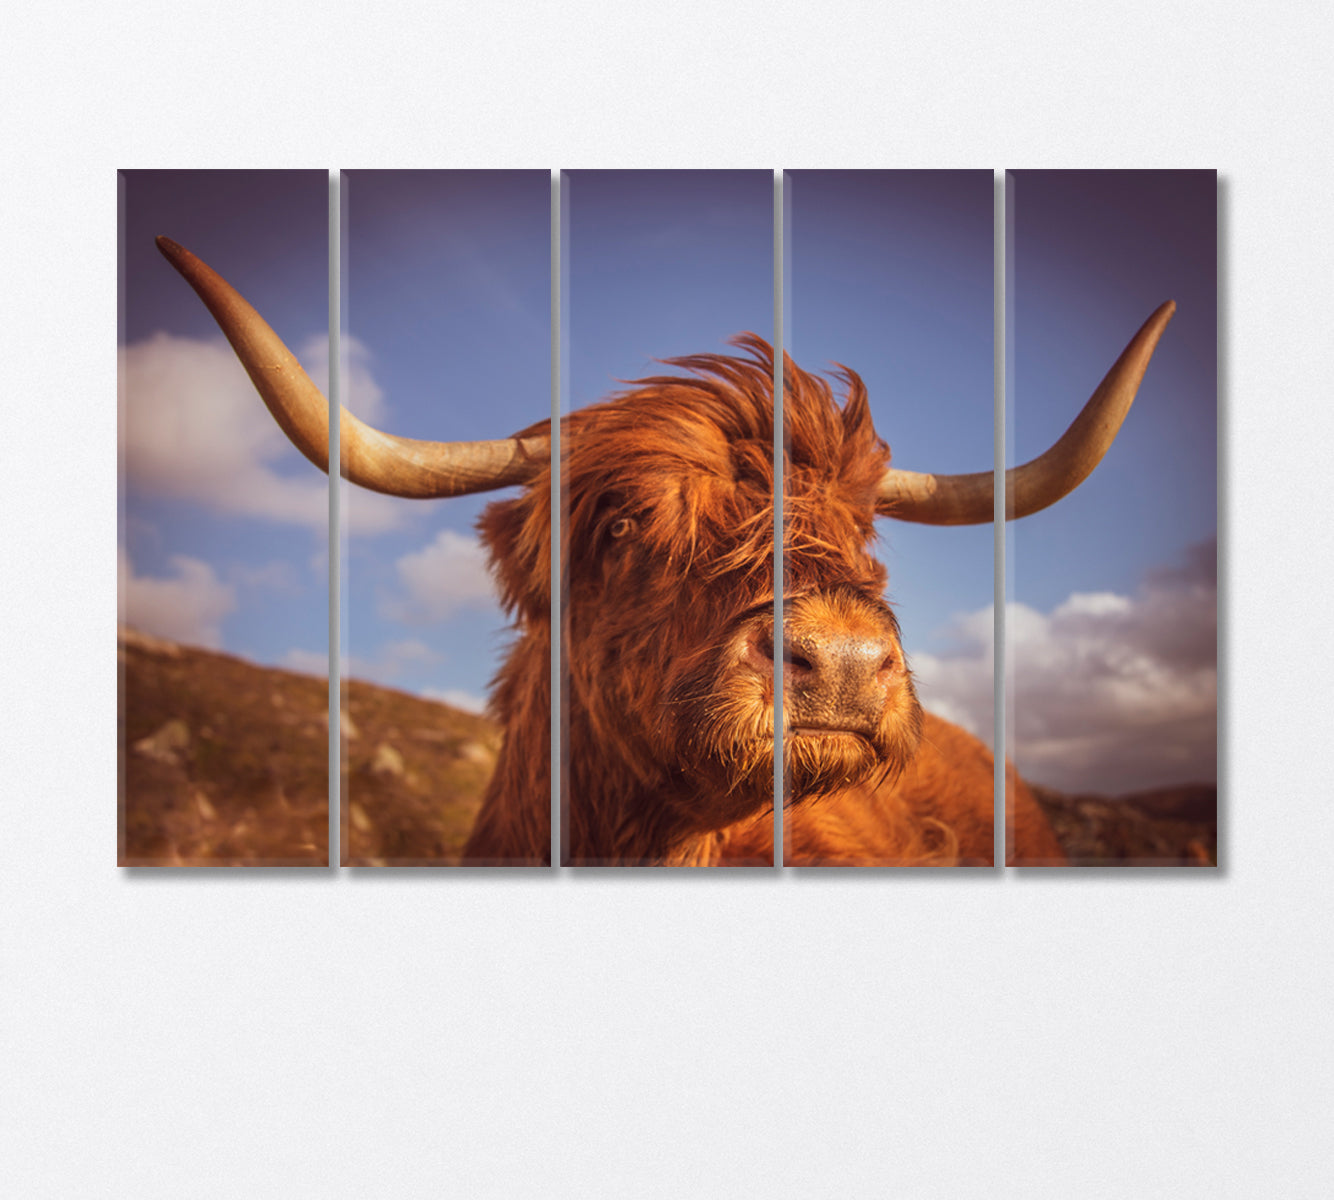 Highland Scottish Cow with Big Horns Canvas Print-Canvas Print-CetArt-5 Panels-36x24 inches-CetArt